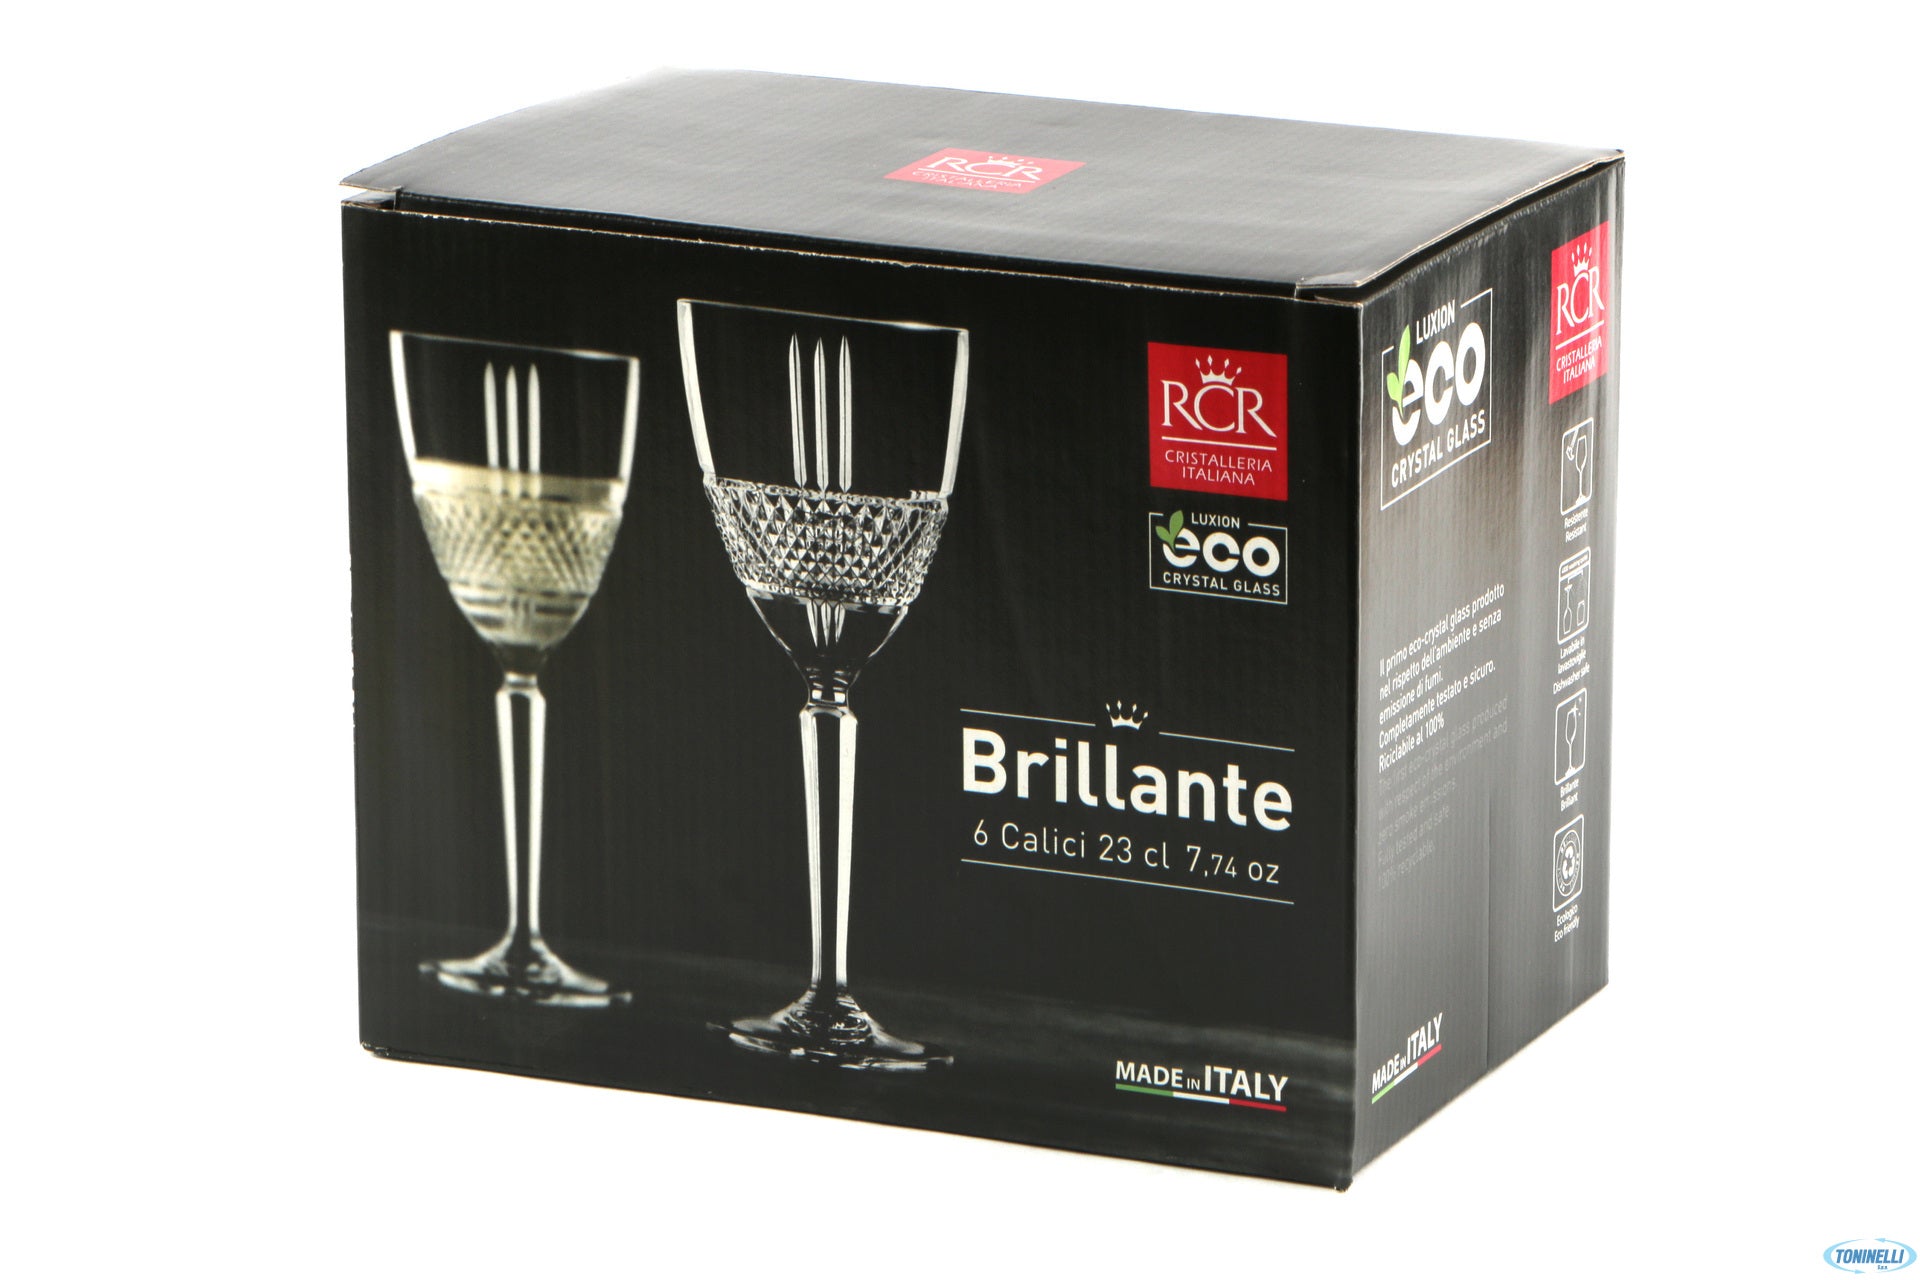 RCR Brilliante 6 Goblets Crystal 23cl, 7.74-OZ made in Italy